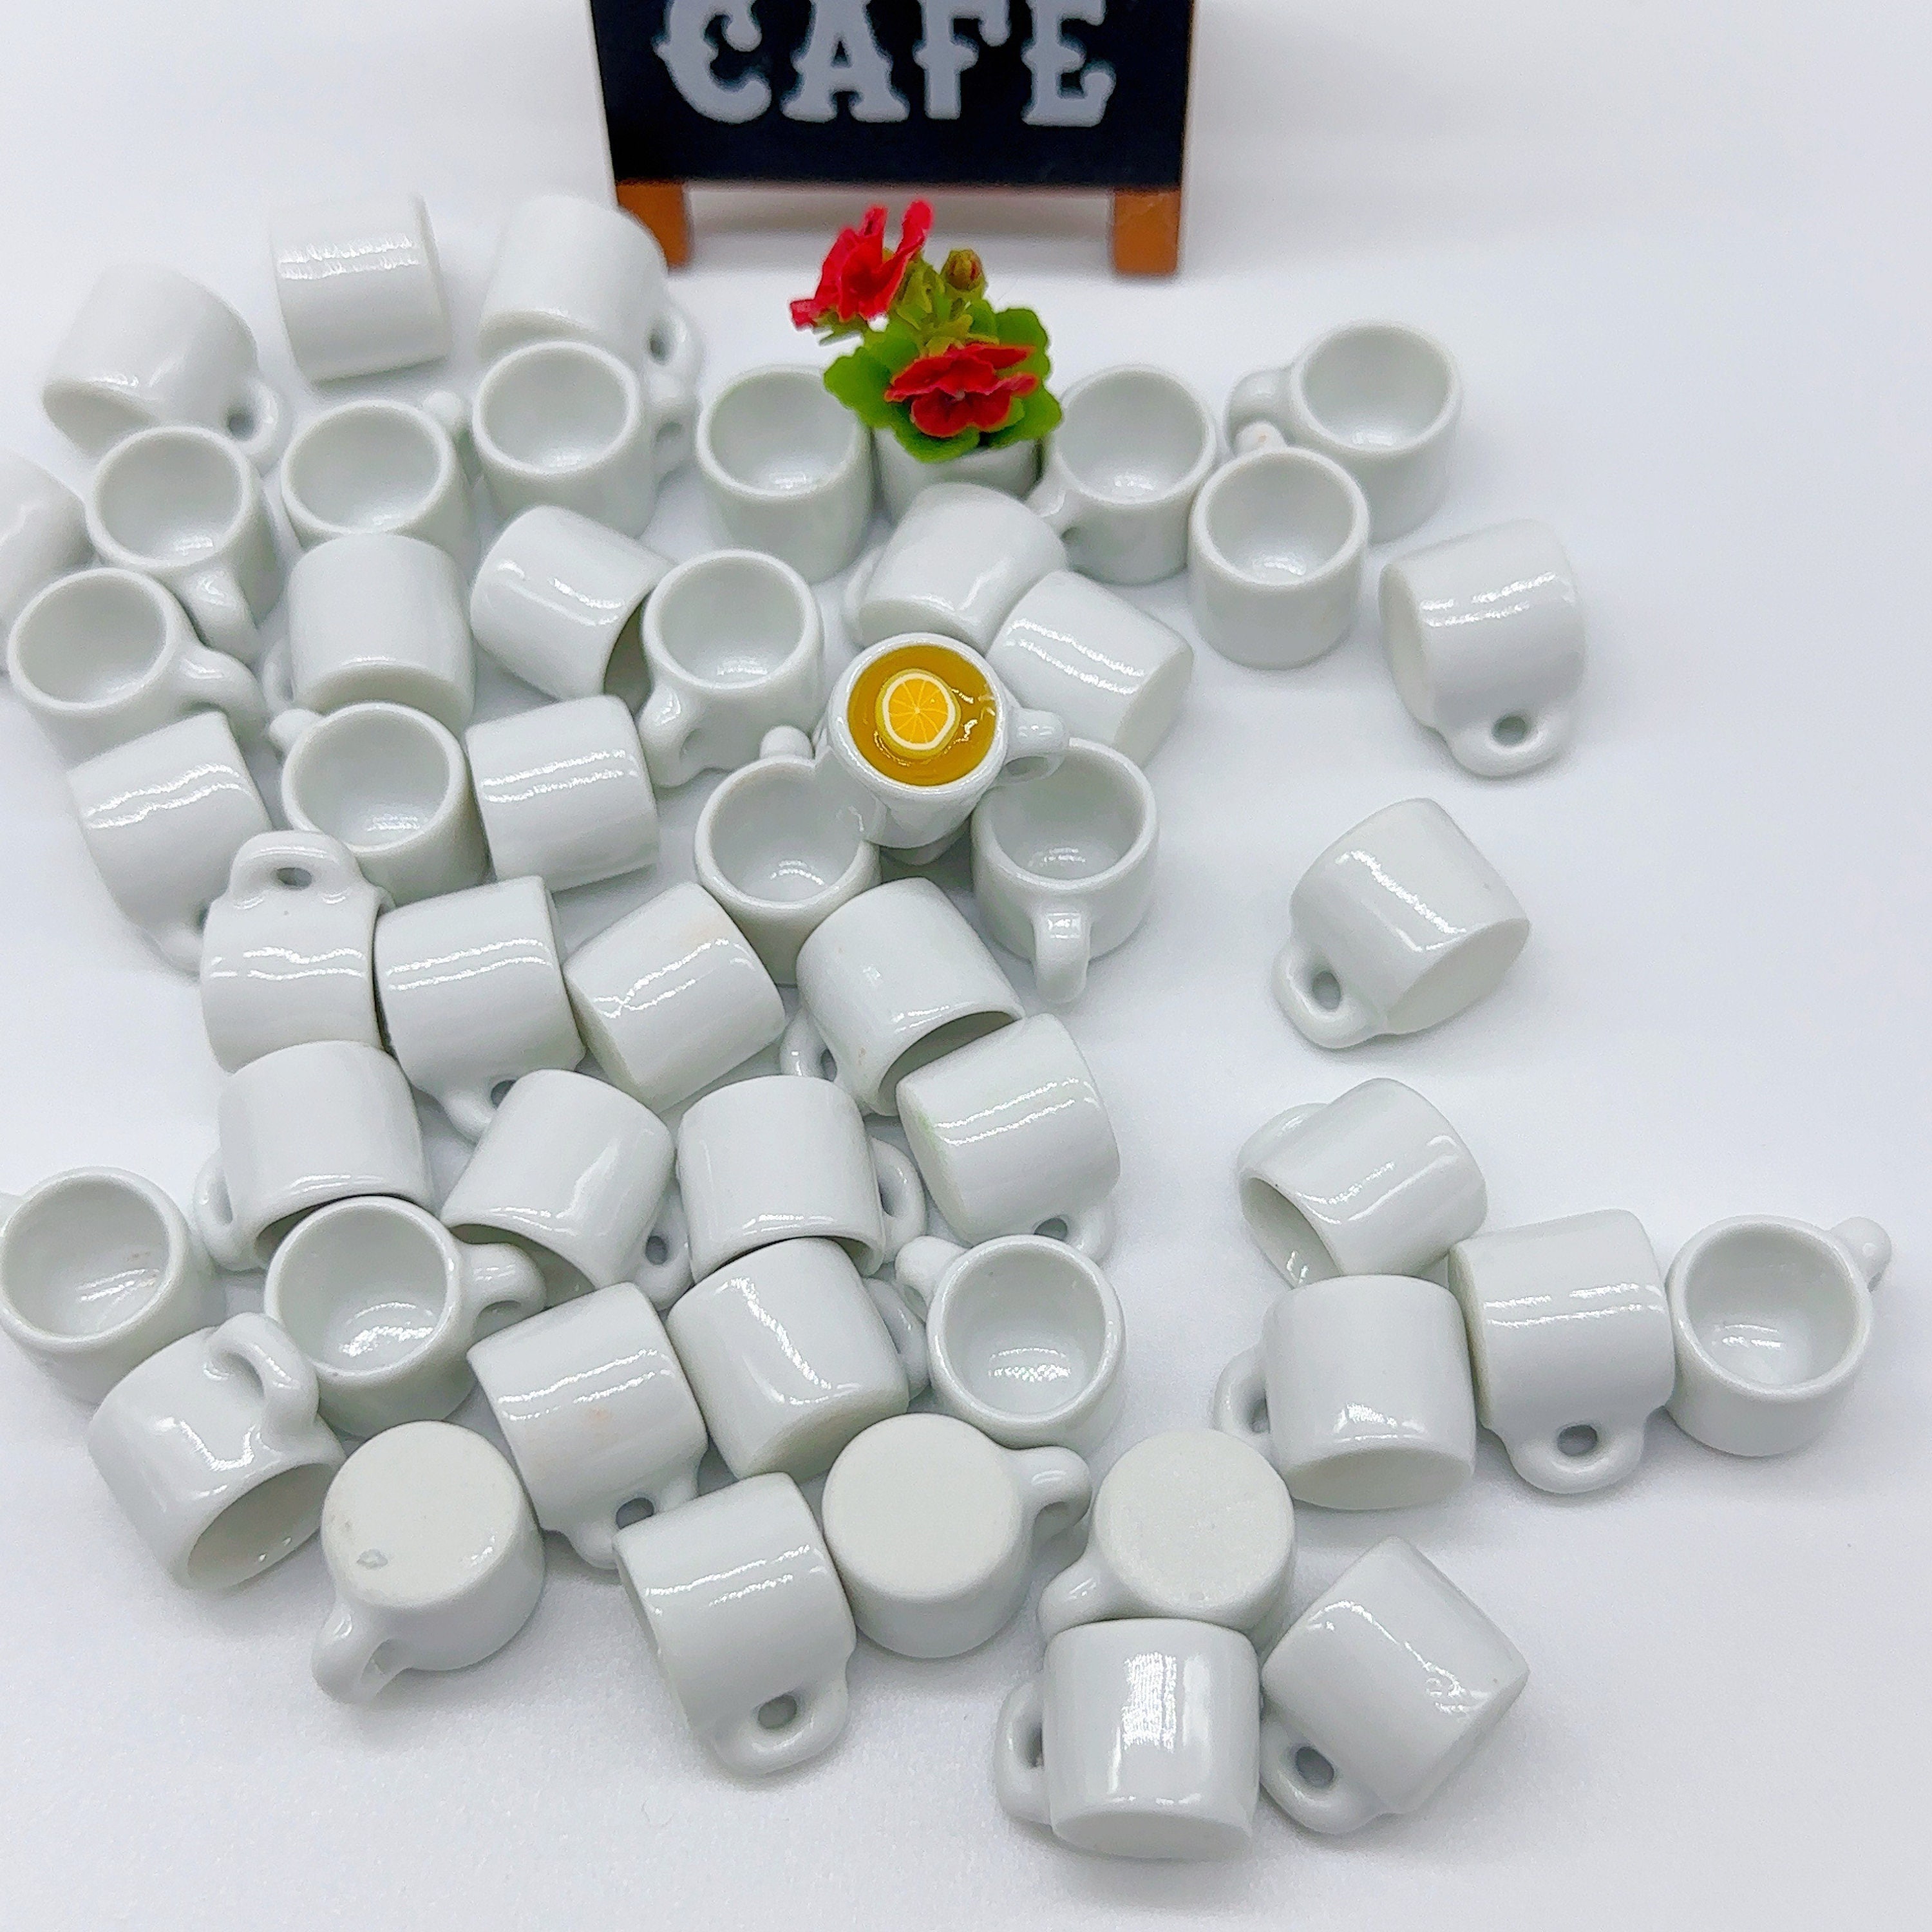 50 Pieces Miniature Ceramic Mug, Miniature Ceramic Cup, Miniature